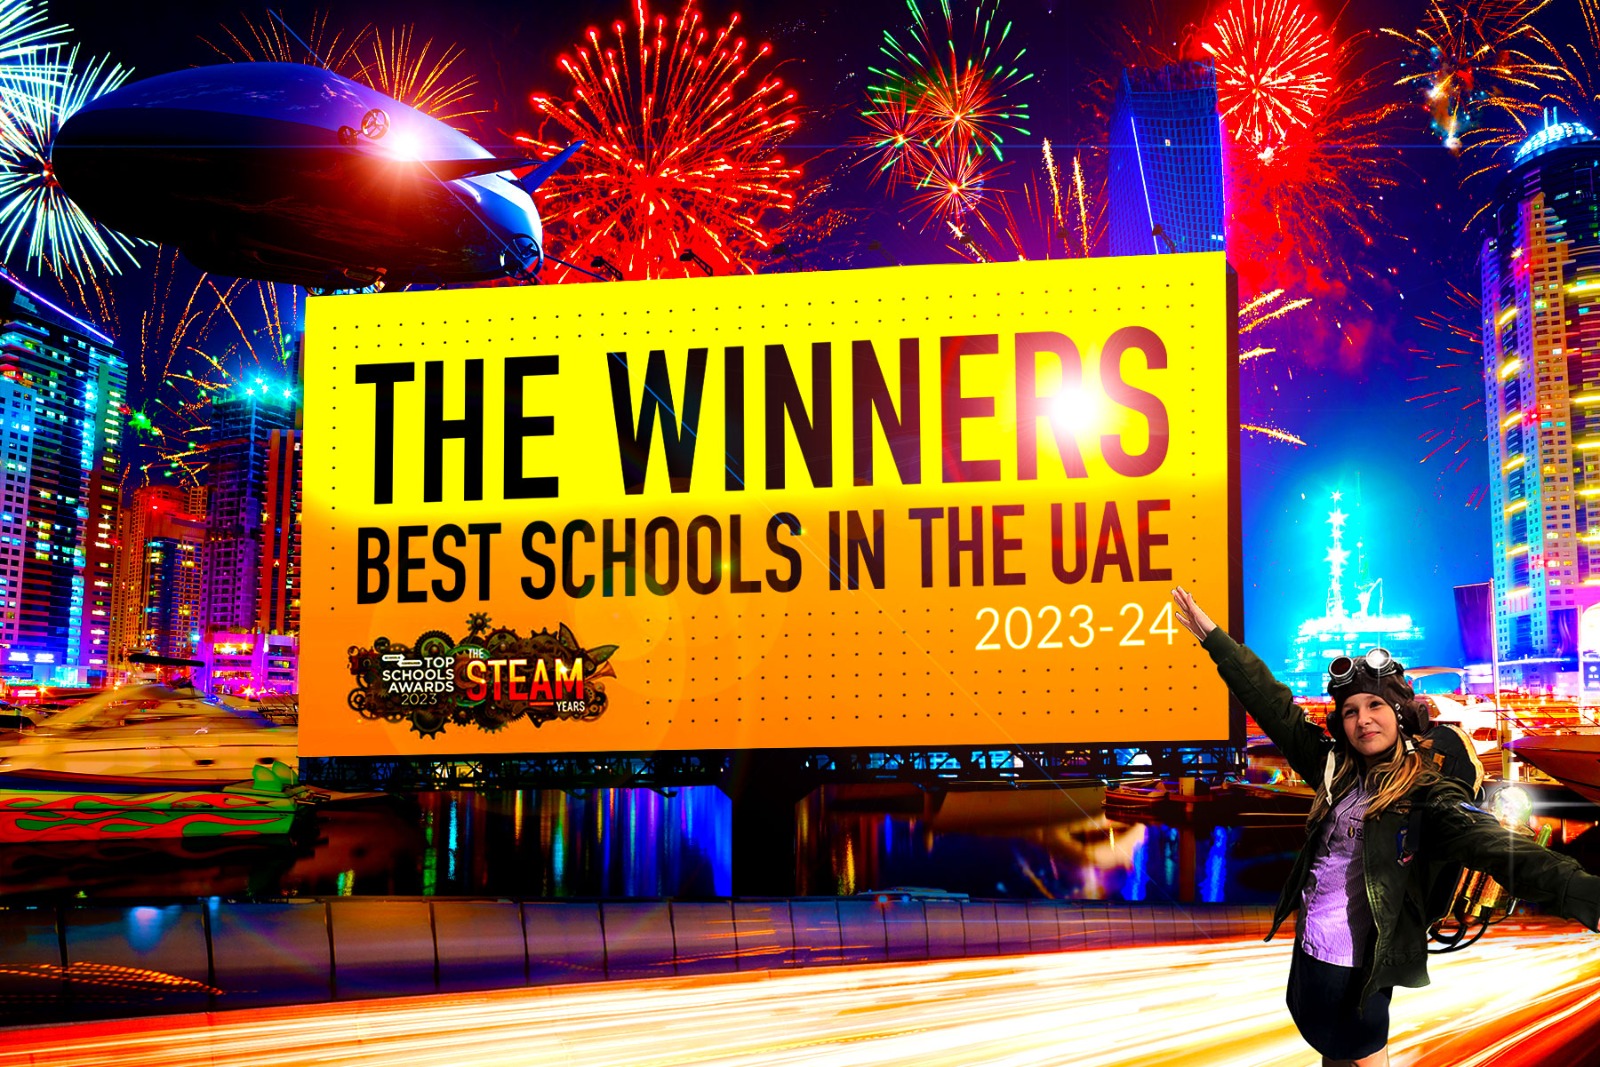 Die besten Schulen in Dubai. Die besten Schulen in Abu Dhabi. Die besten Schulen in den VAE. Offiziell. Die Top Schools Awards 2023–2024 bekannt gegeben.